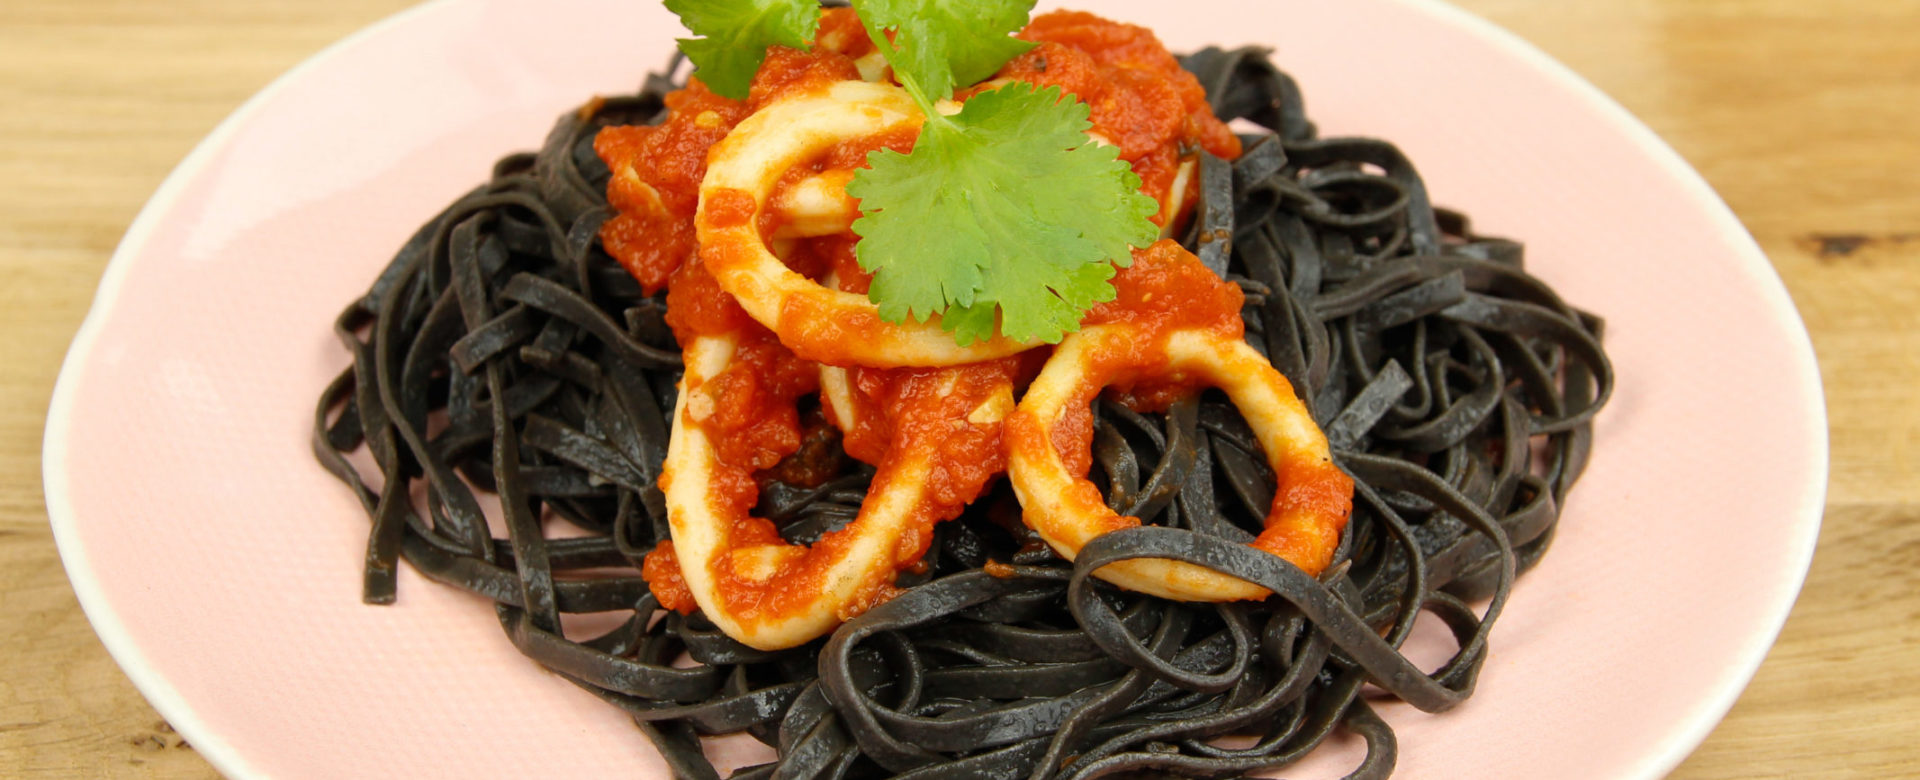 Zwarte pasta met inktvisringen